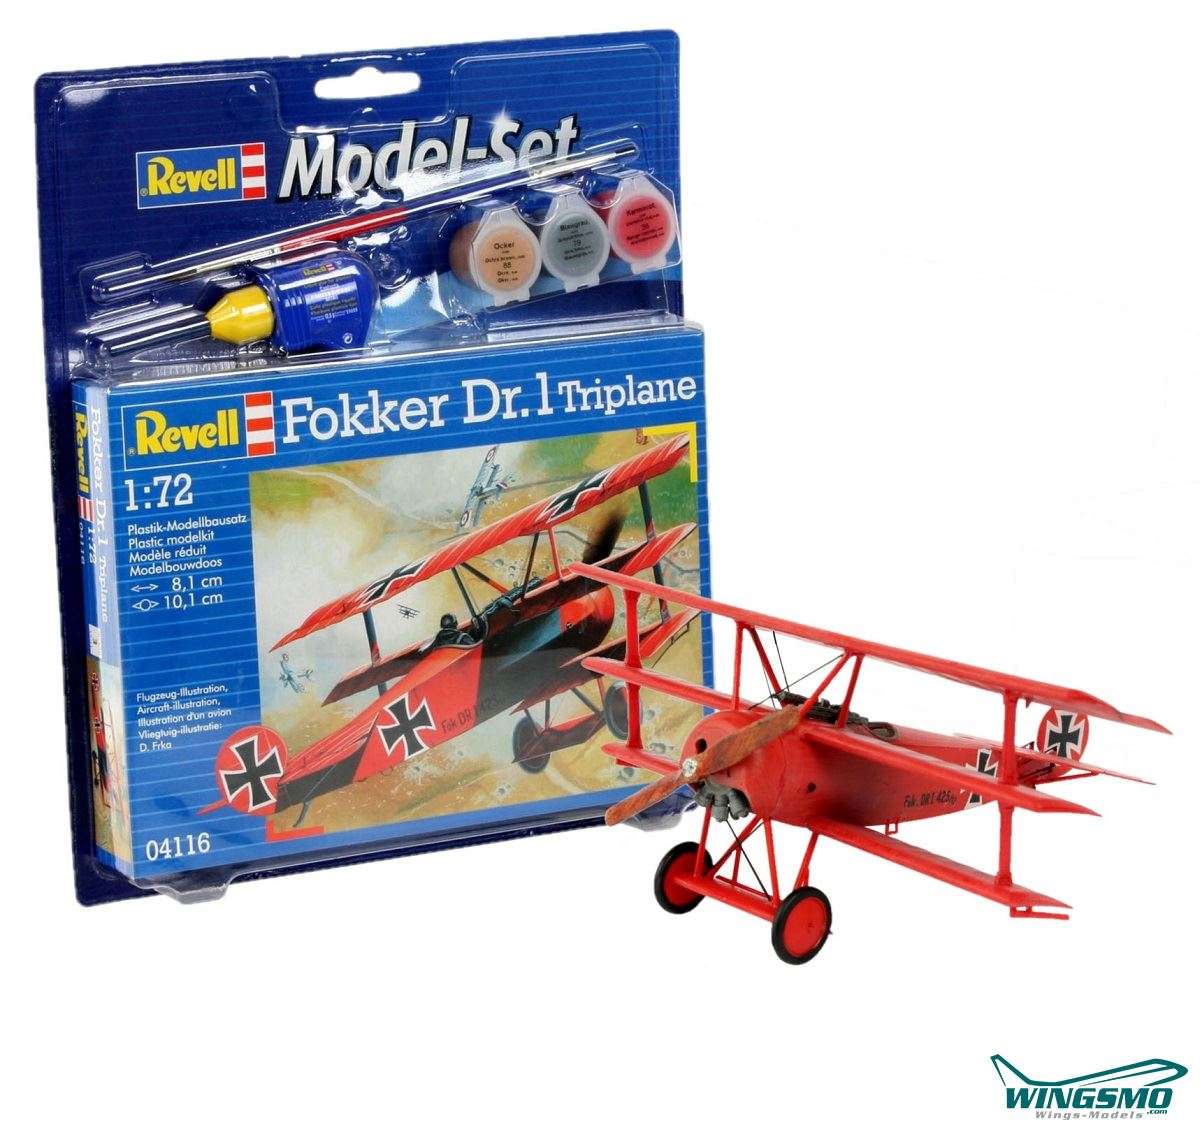 Revell Model Sets Fokker DR. 1 Triplane 1:72 64116